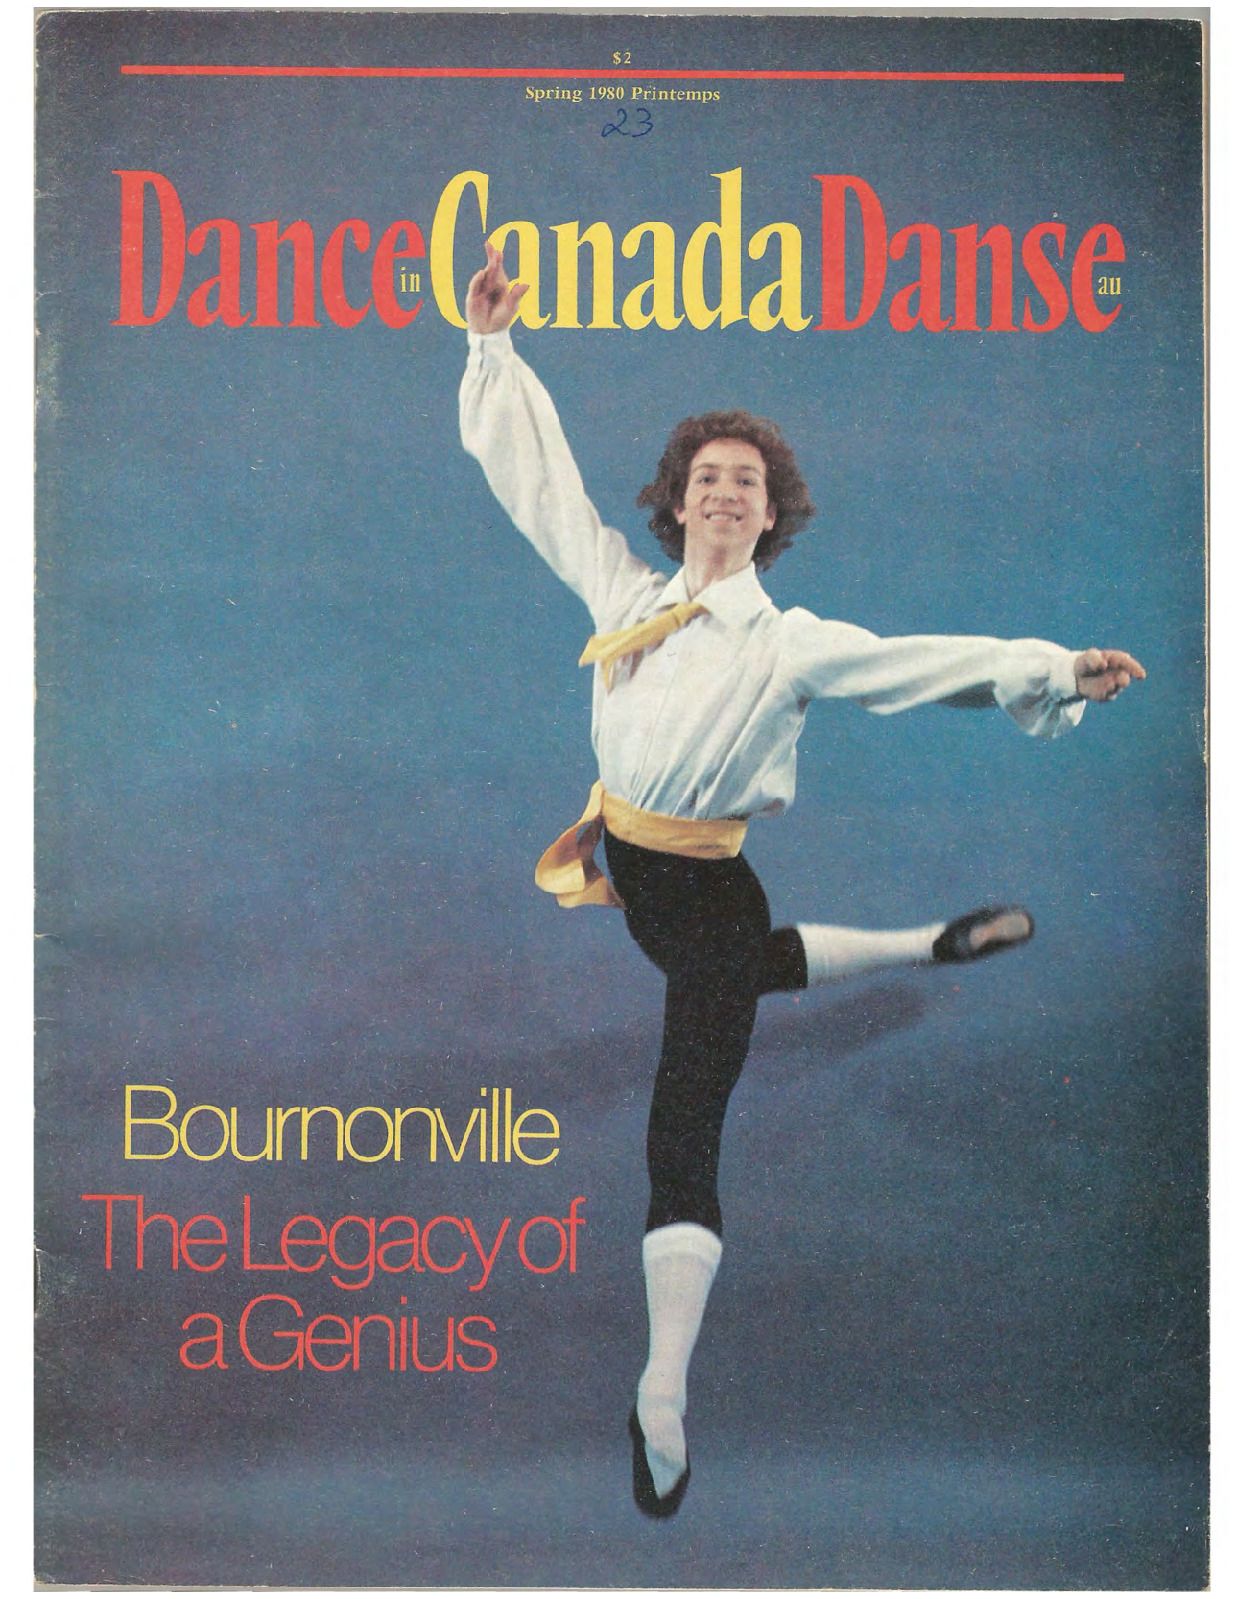 Dance in Canada Magazine No 23 Spring 1980 compressed.pdf